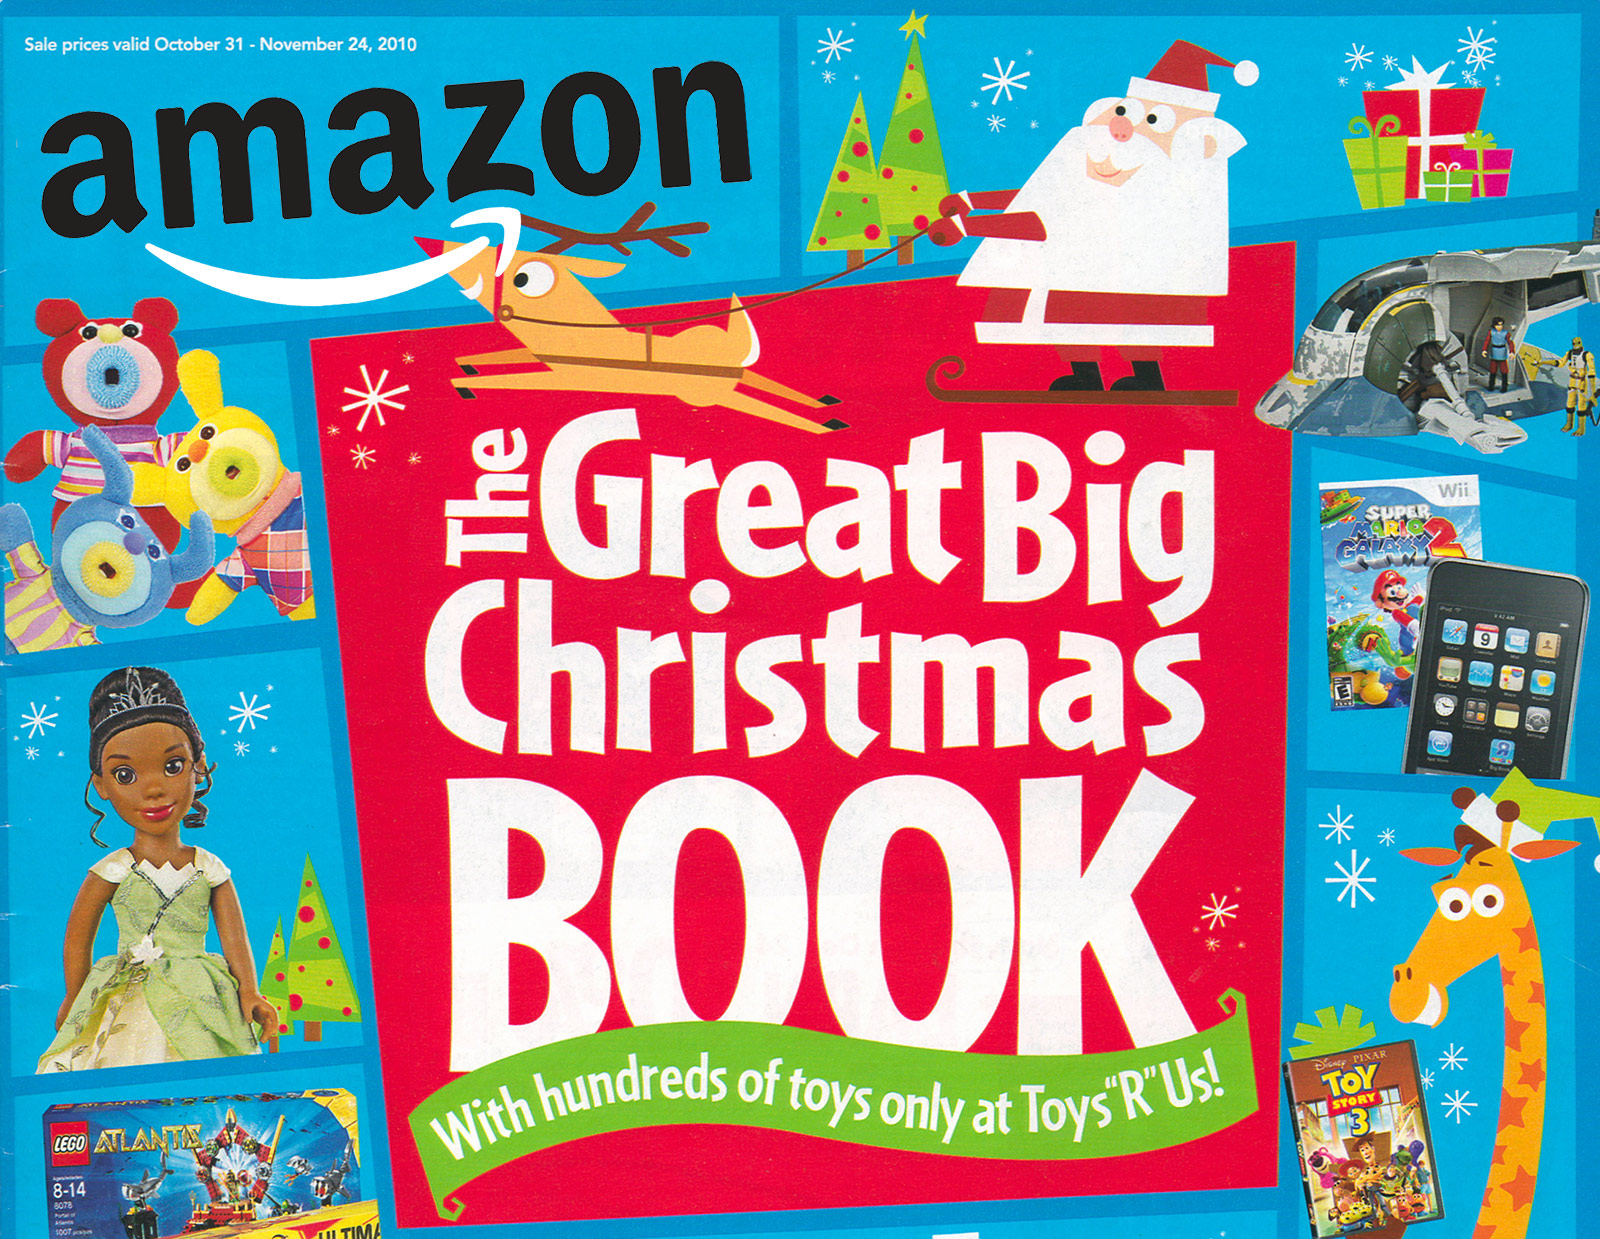 Amazon big toys book.